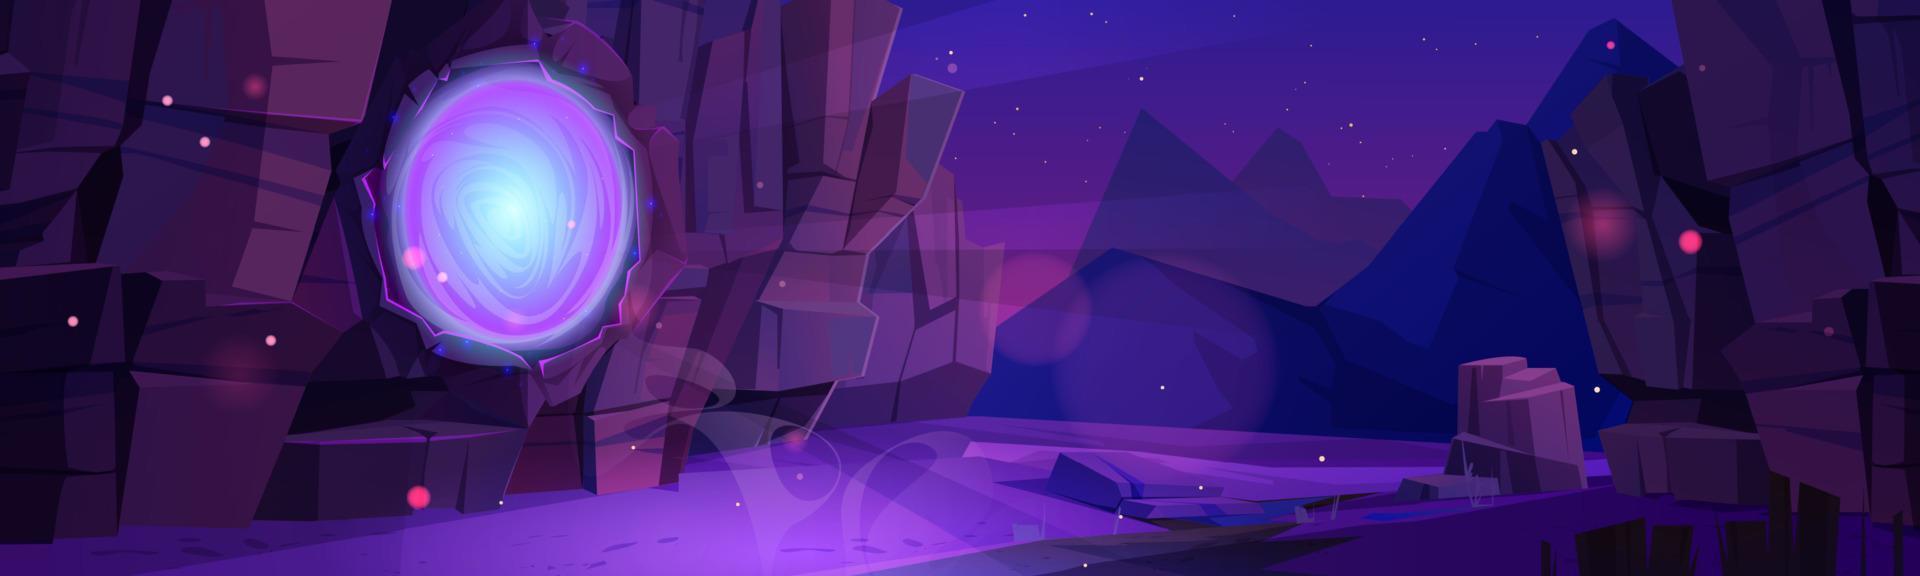 Magic portal on rock wall with mystic purple glow vector